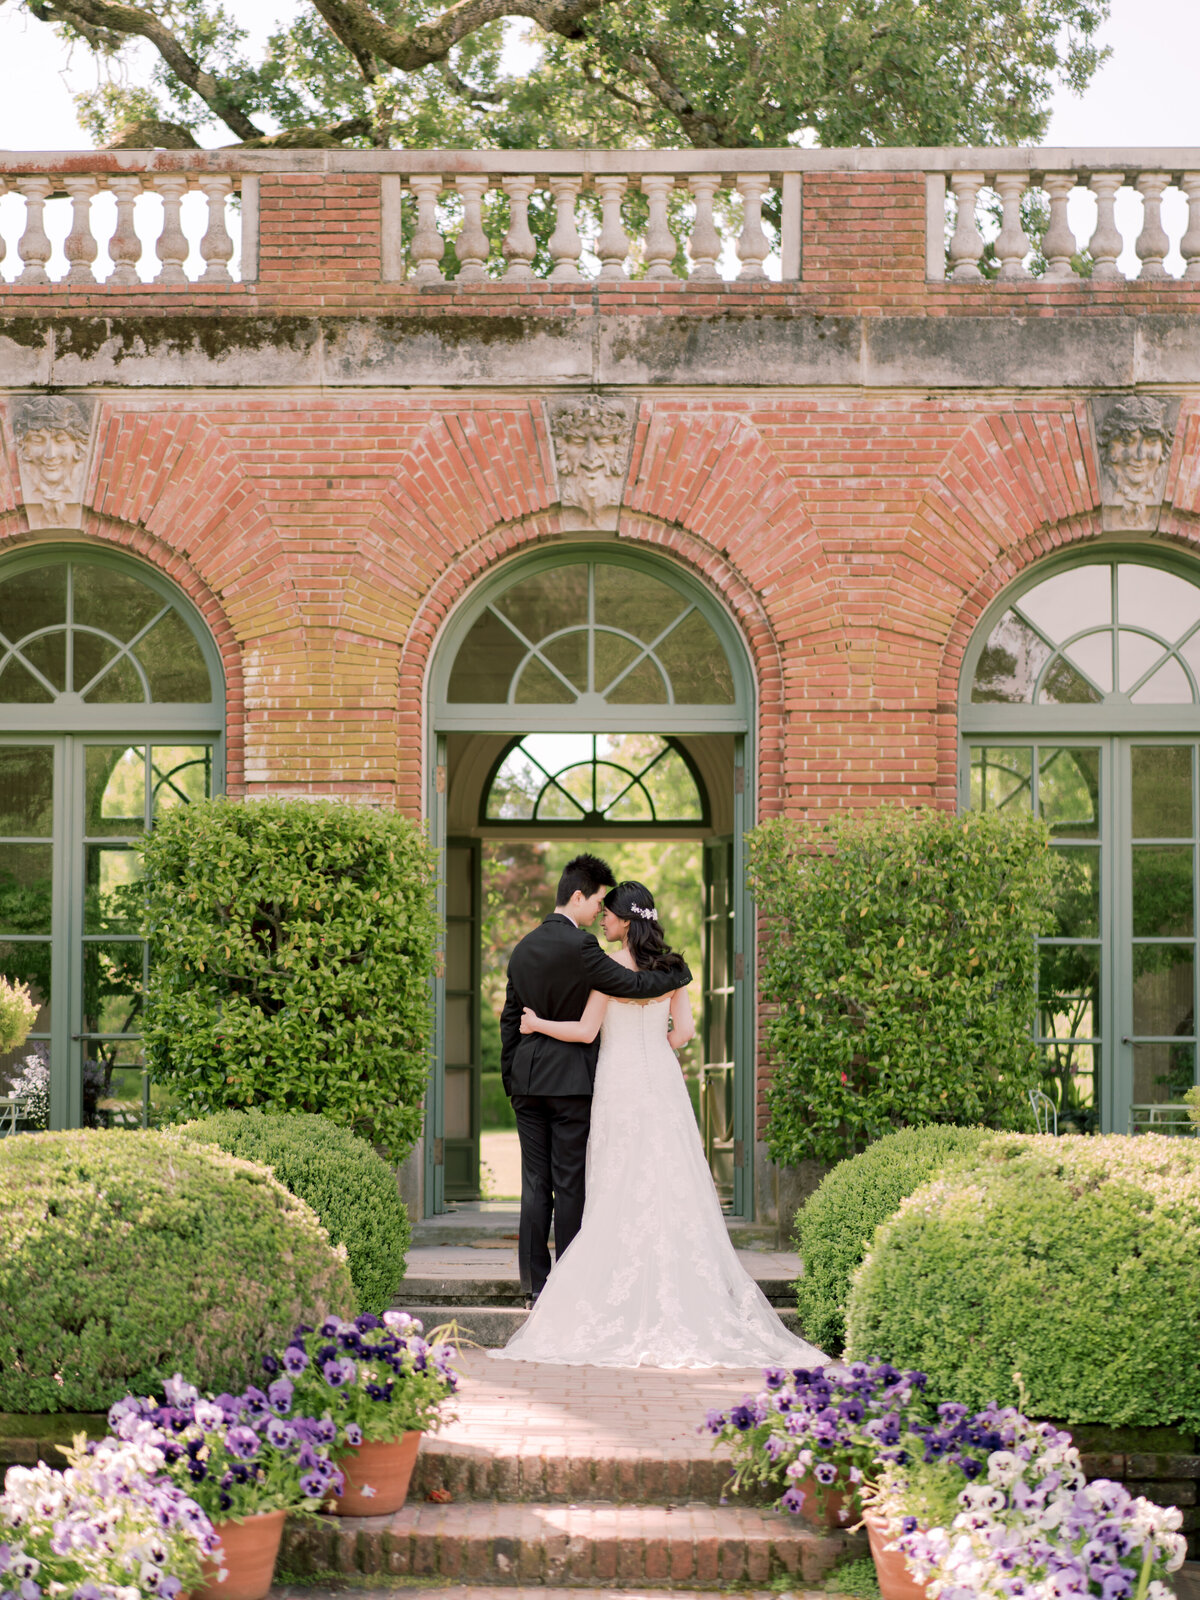 Elaine + Ming Filoli Historic House and Garden Wedding Cassie Valente Photography 0020